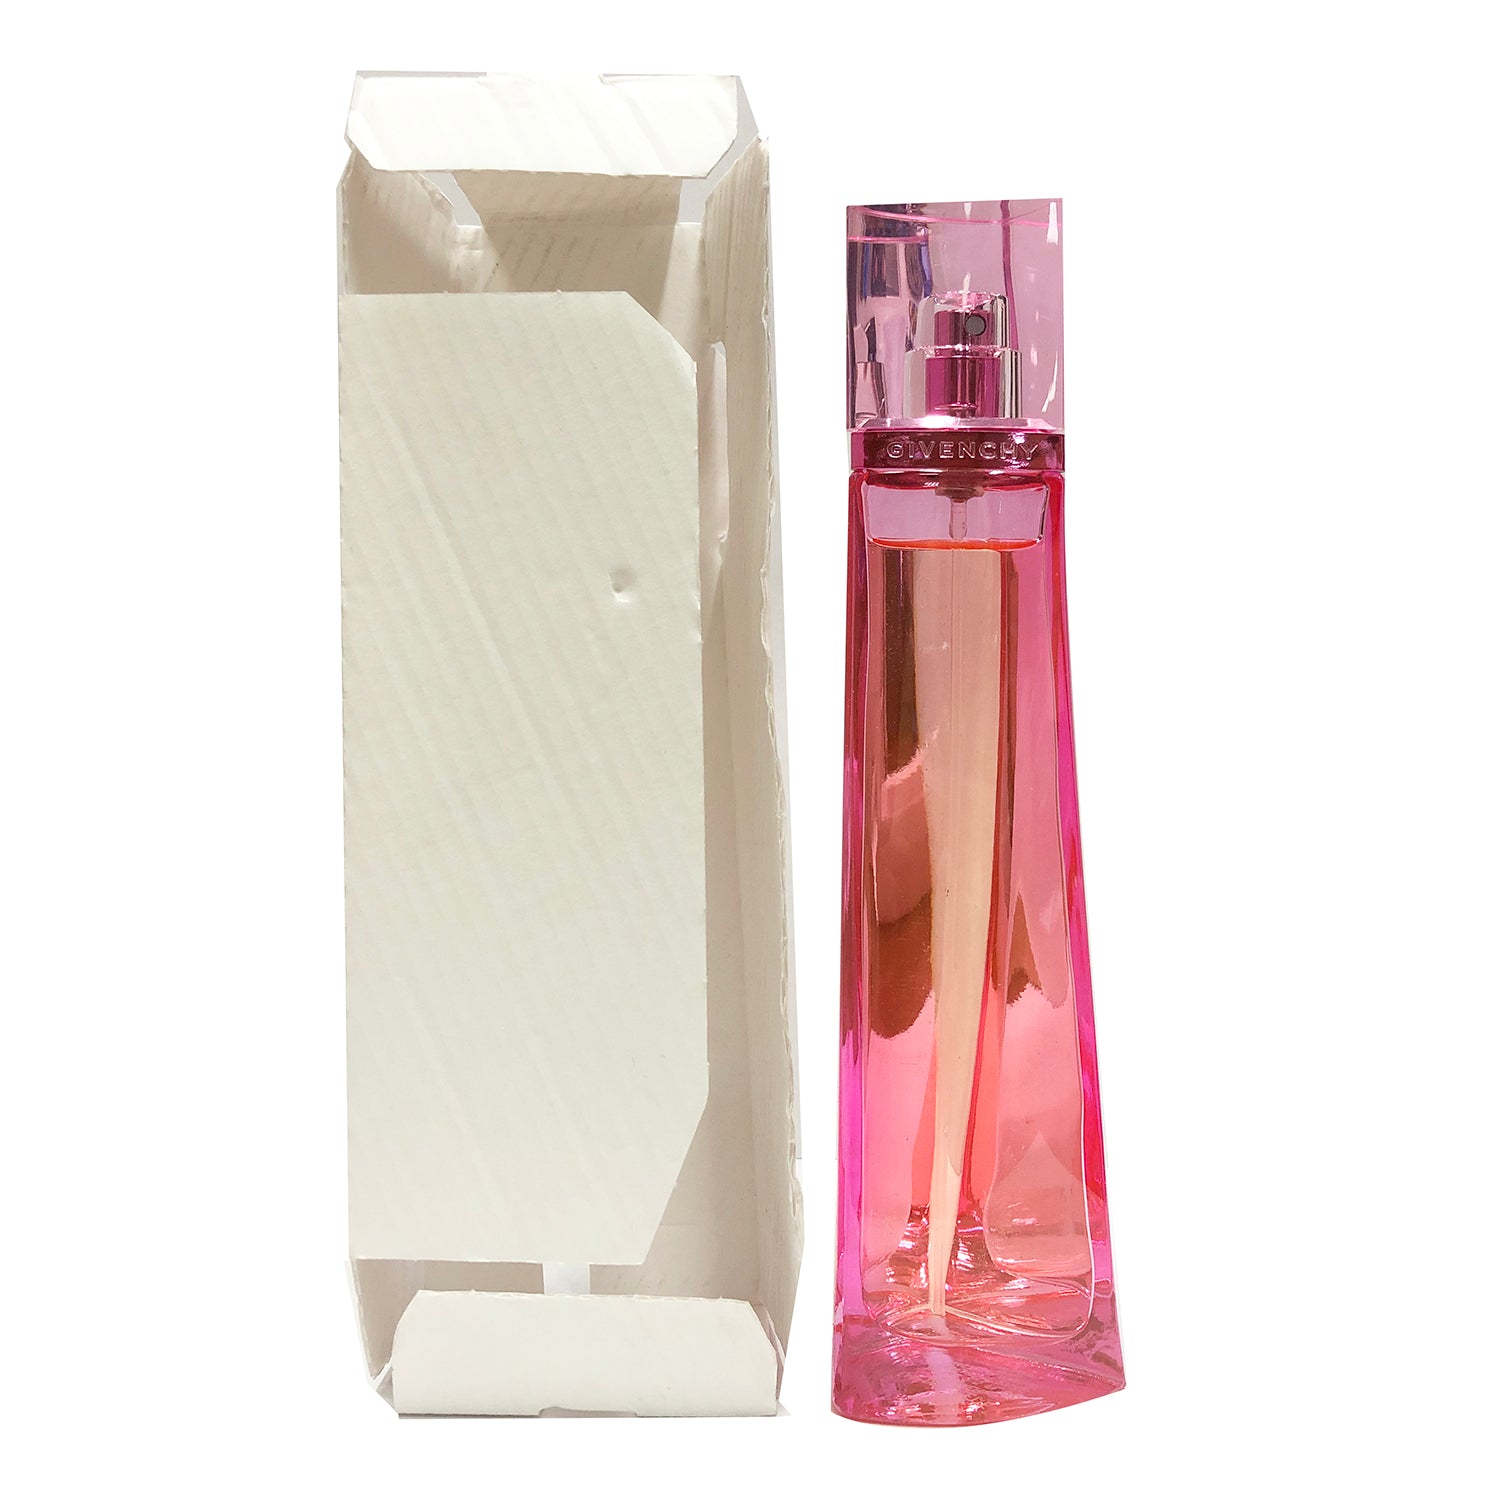 Givenchy fragrances - Givenchy Very Irresistible Eau De Parfum For Women  (75 ml./2.5 oz.)